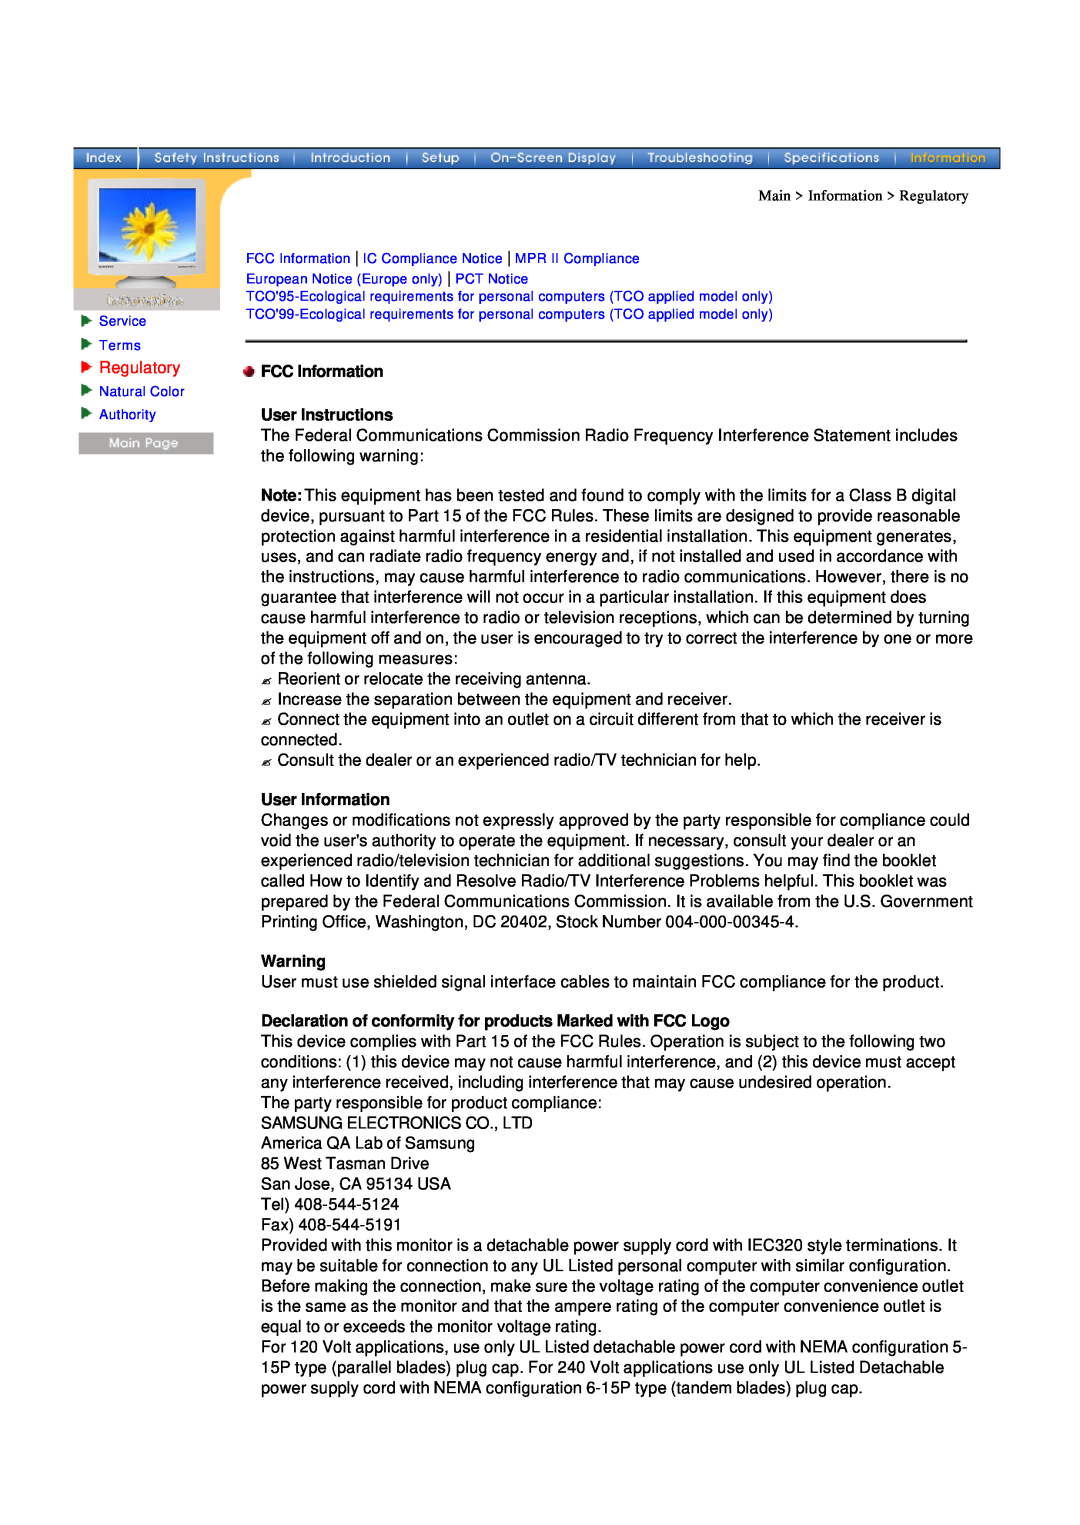 Samsung 955MB manual Regulatory, FCC Information User Instructions, User Information 